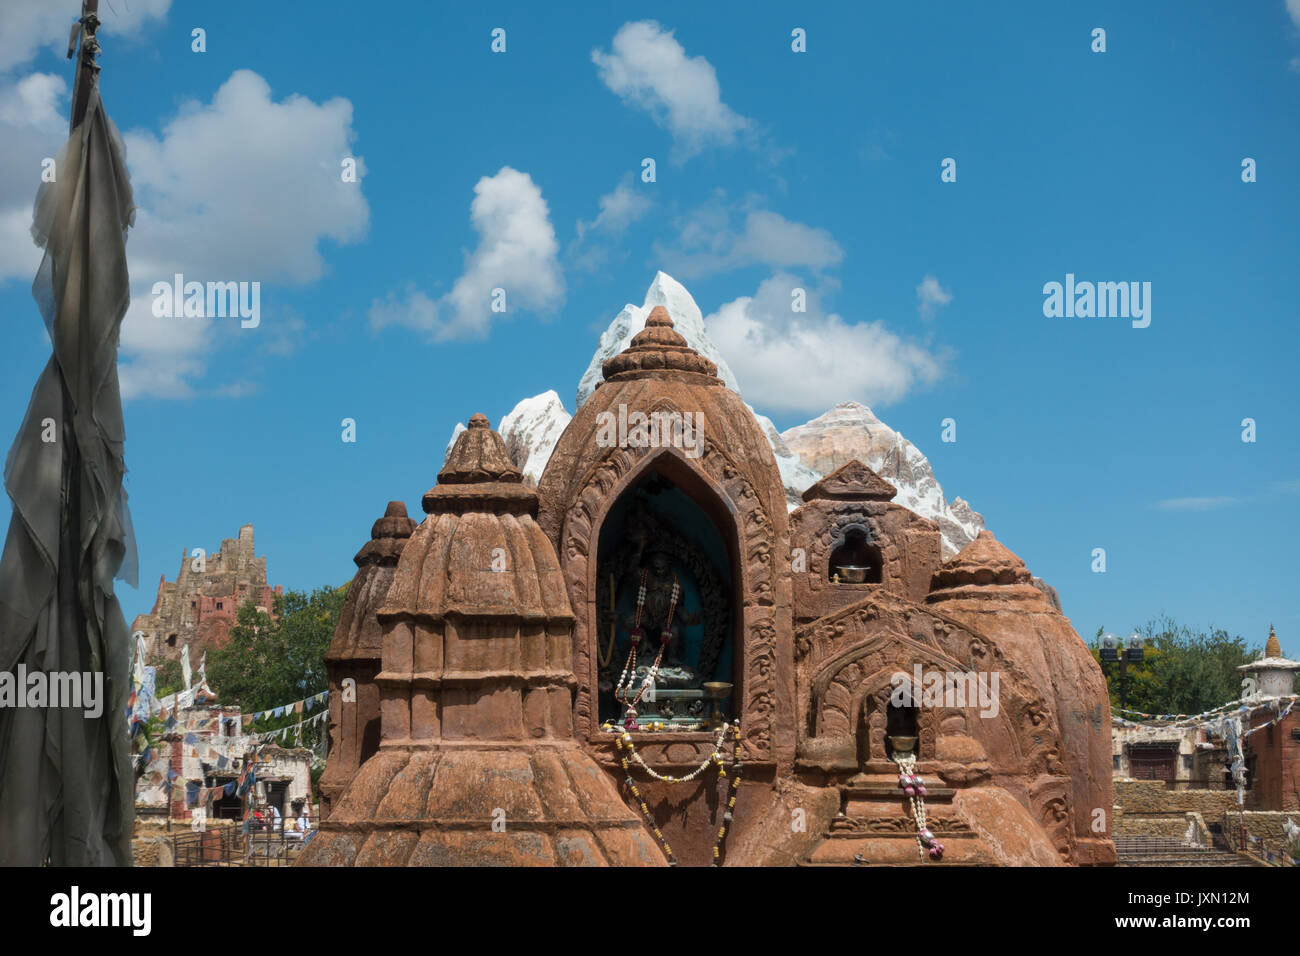 Shrine in Disneys Animal Kingdom theme park matching the outline of Mount Everest Stock Photo